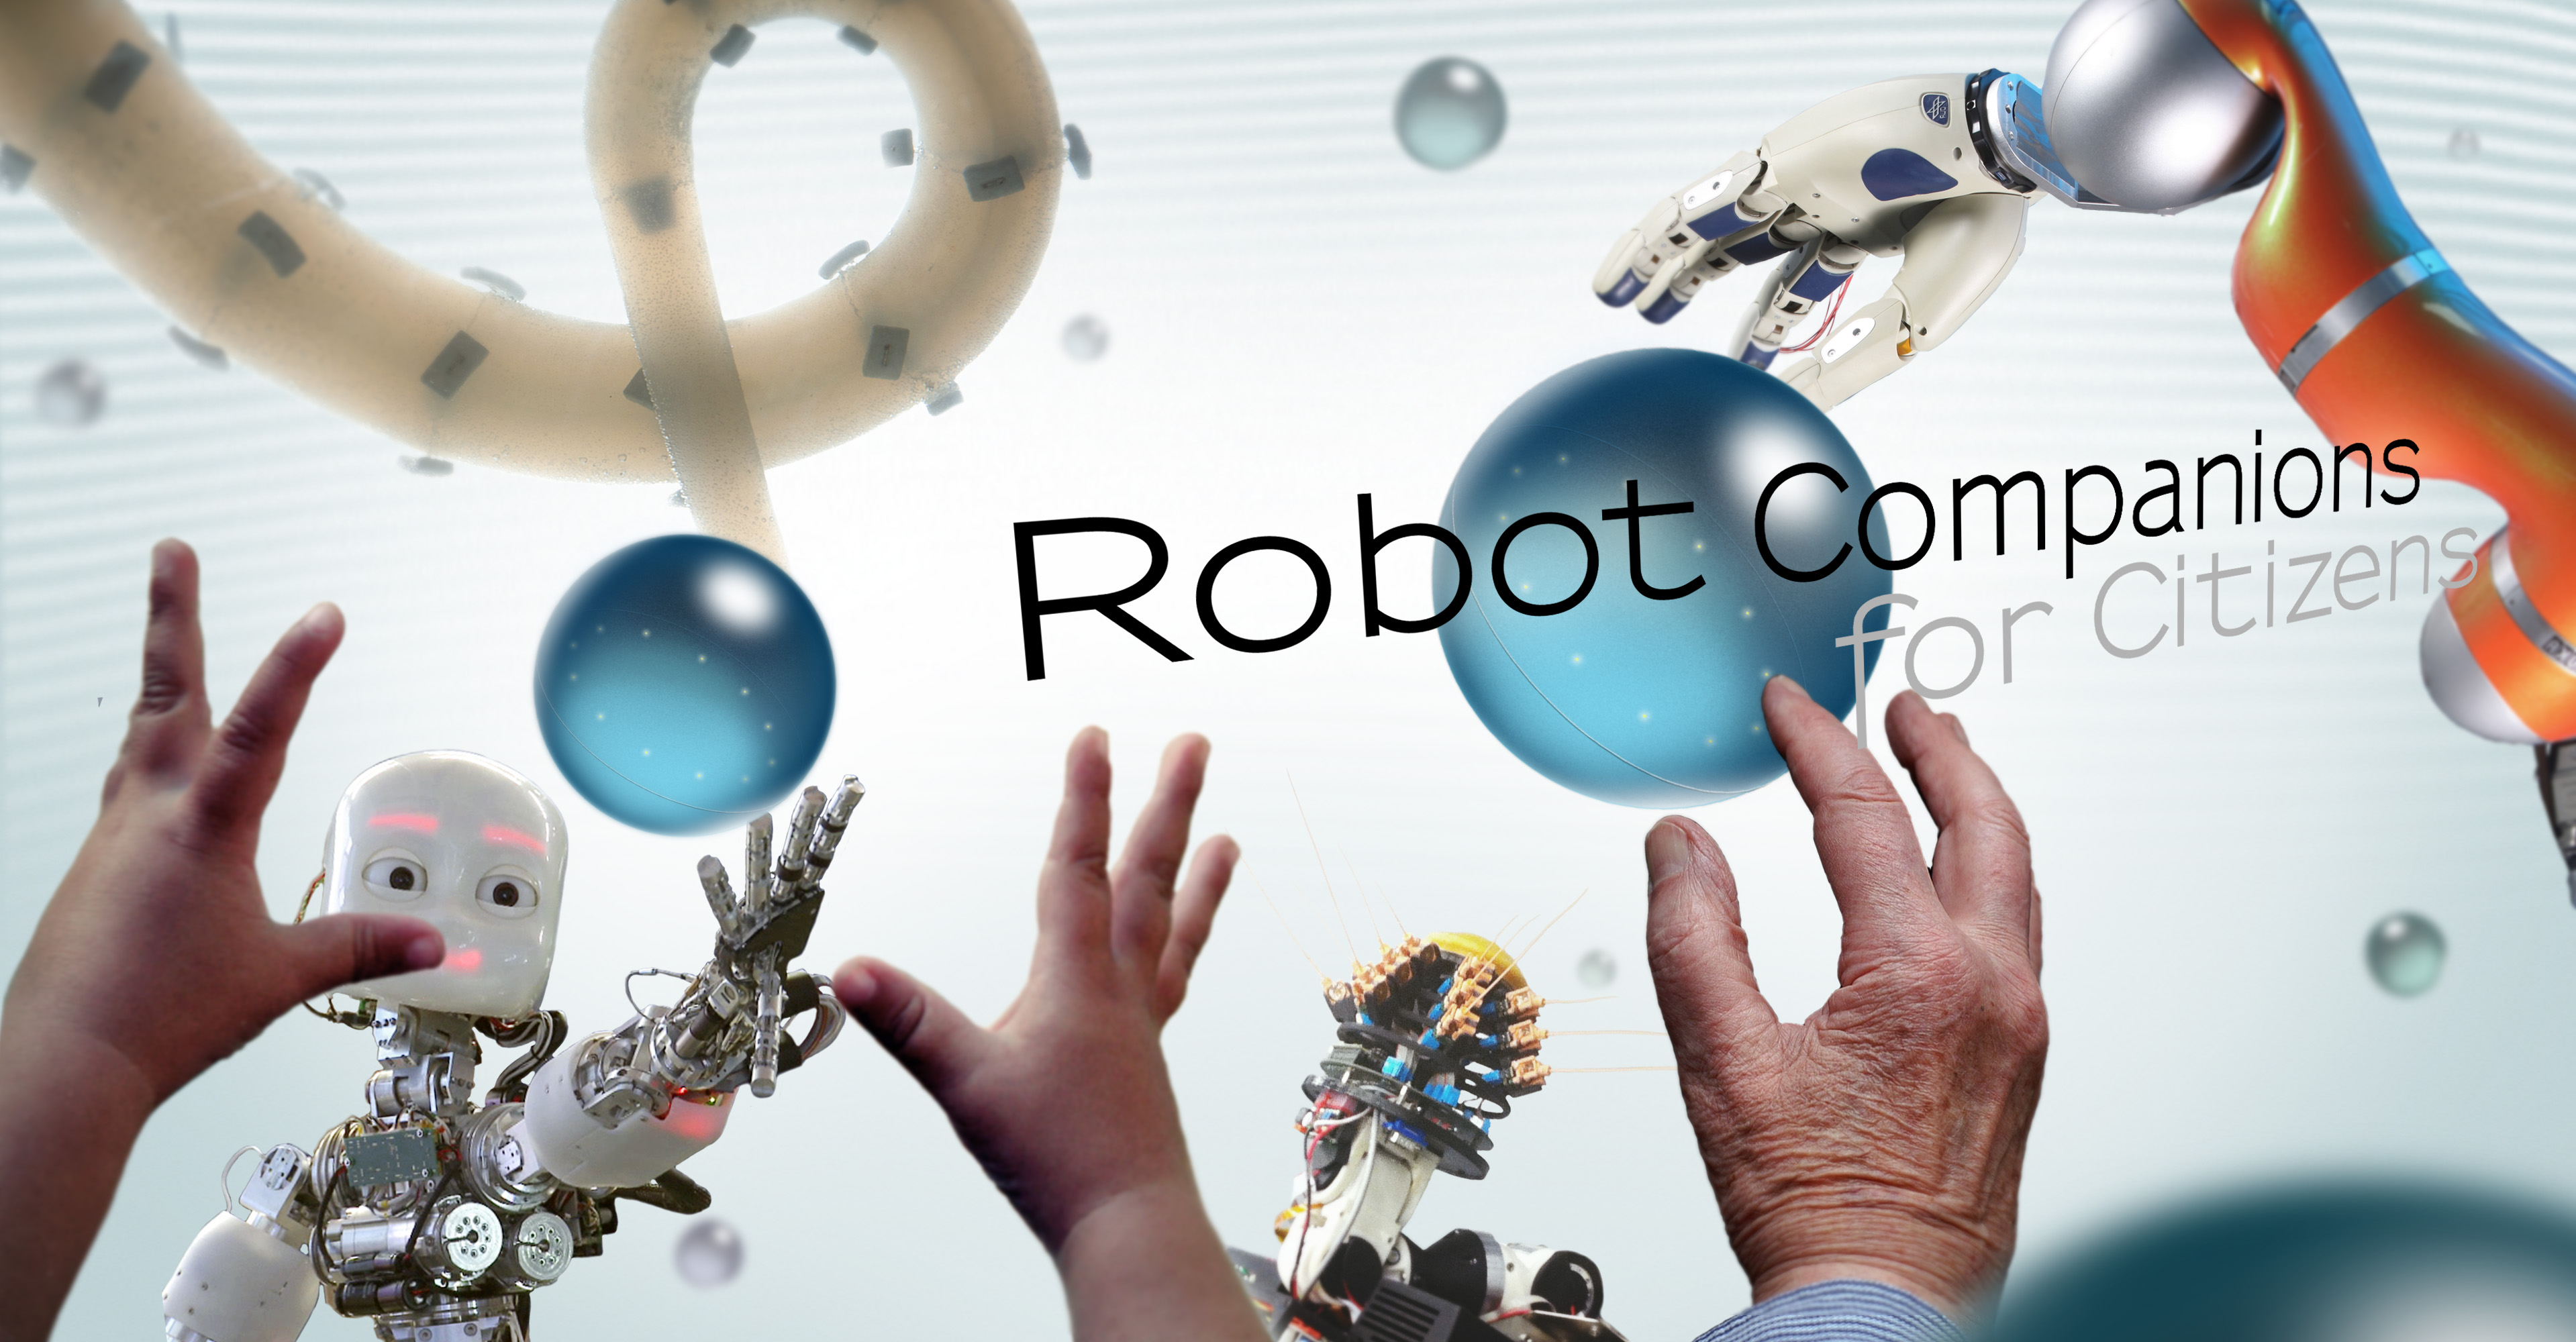 Robot Companions Flagship Funding Proposal For 1 Billion Euro